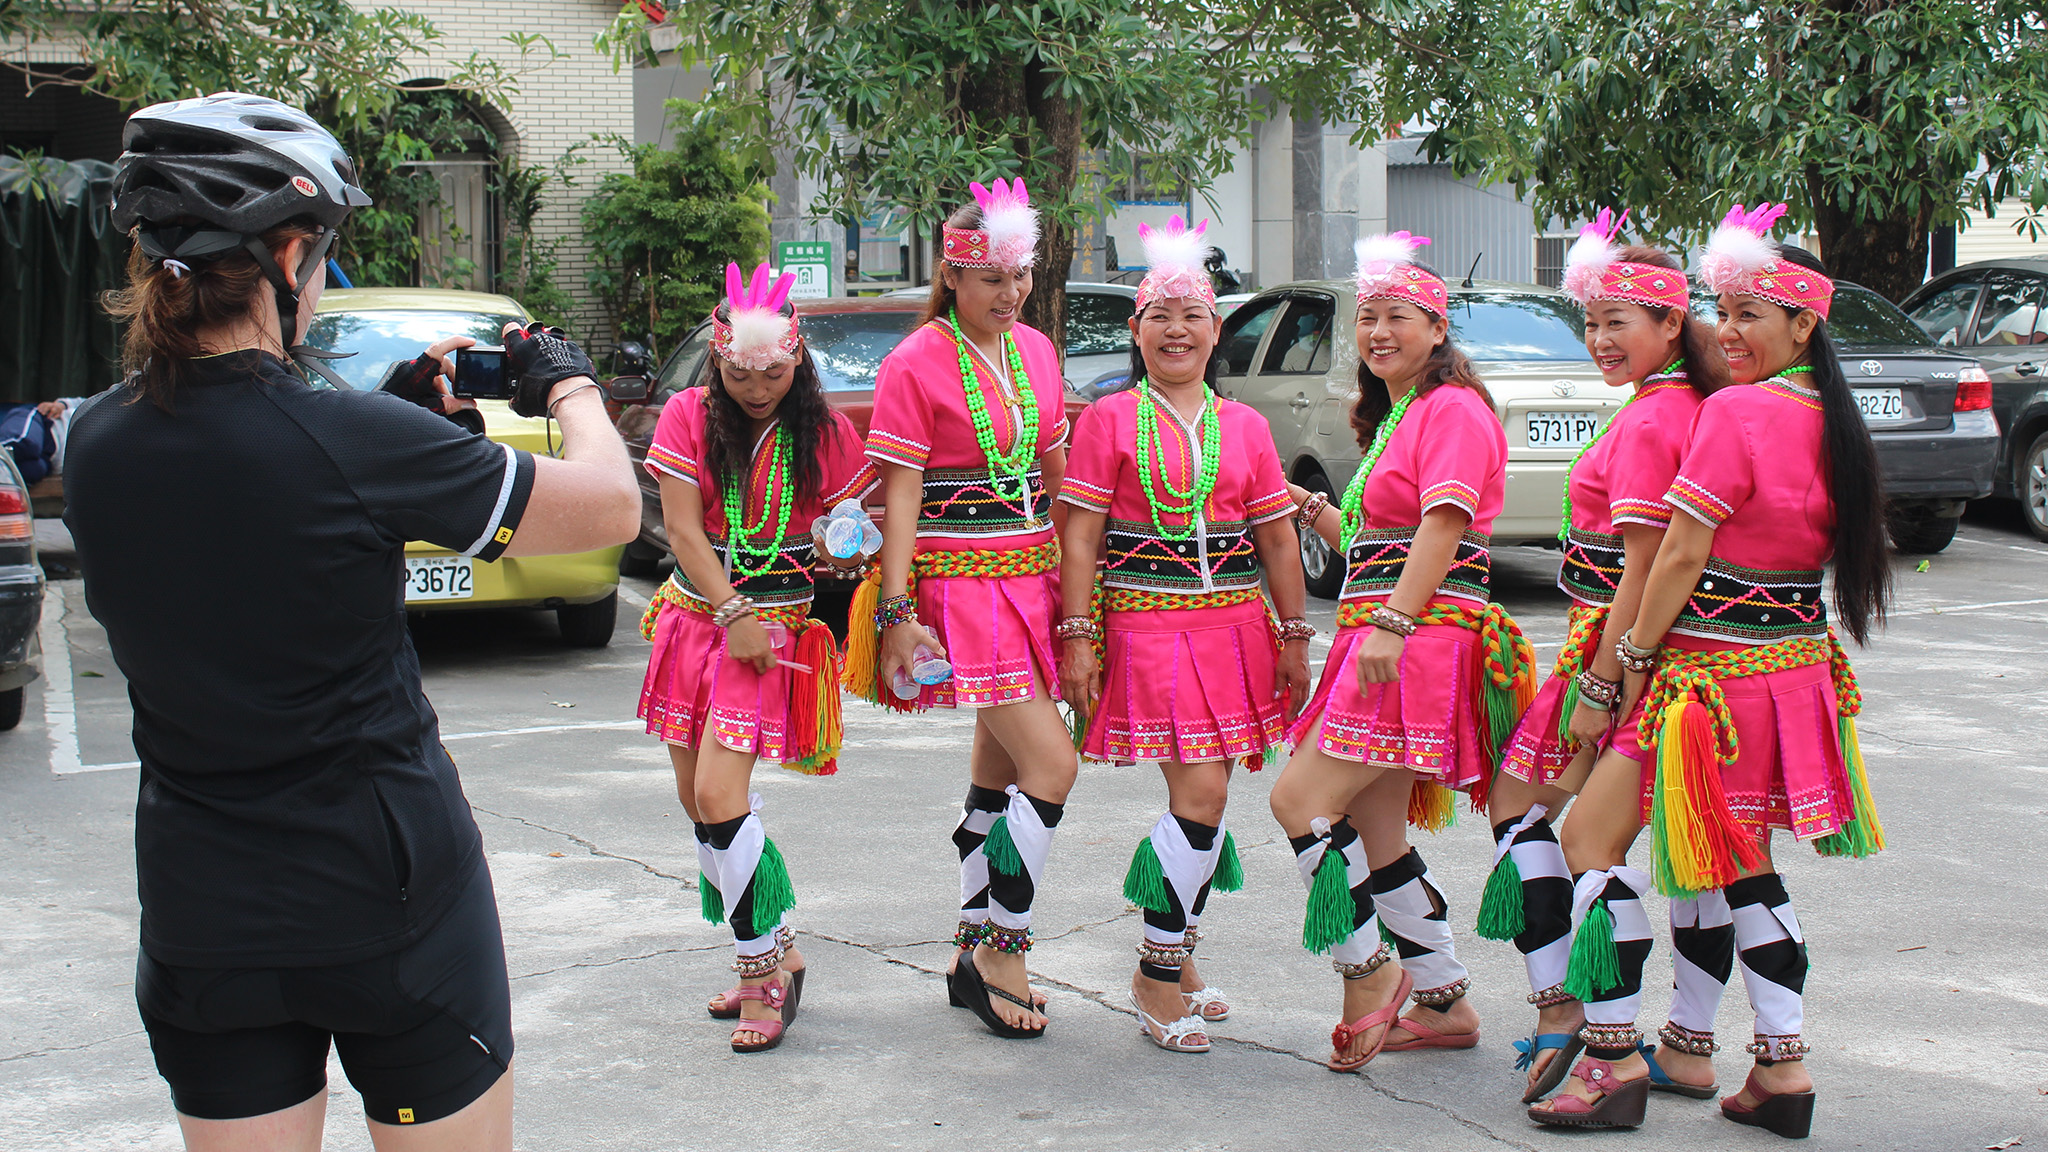 Women celebrating in traditional dress